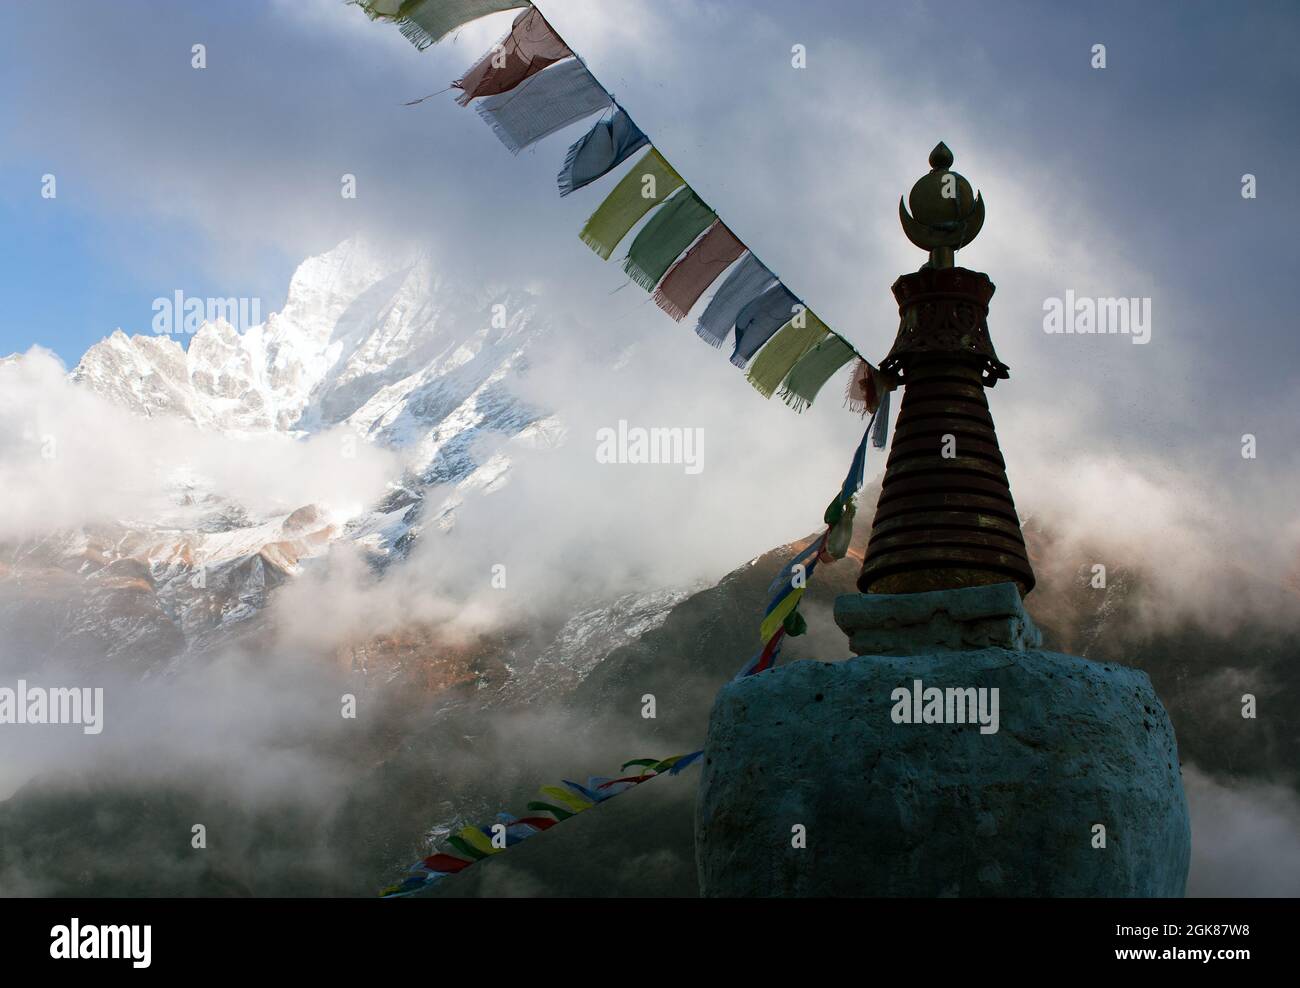 Buddhist Stupa with prayer flags and Thamserku peak - Trek to Everest base camp - Nepal Stock Photo